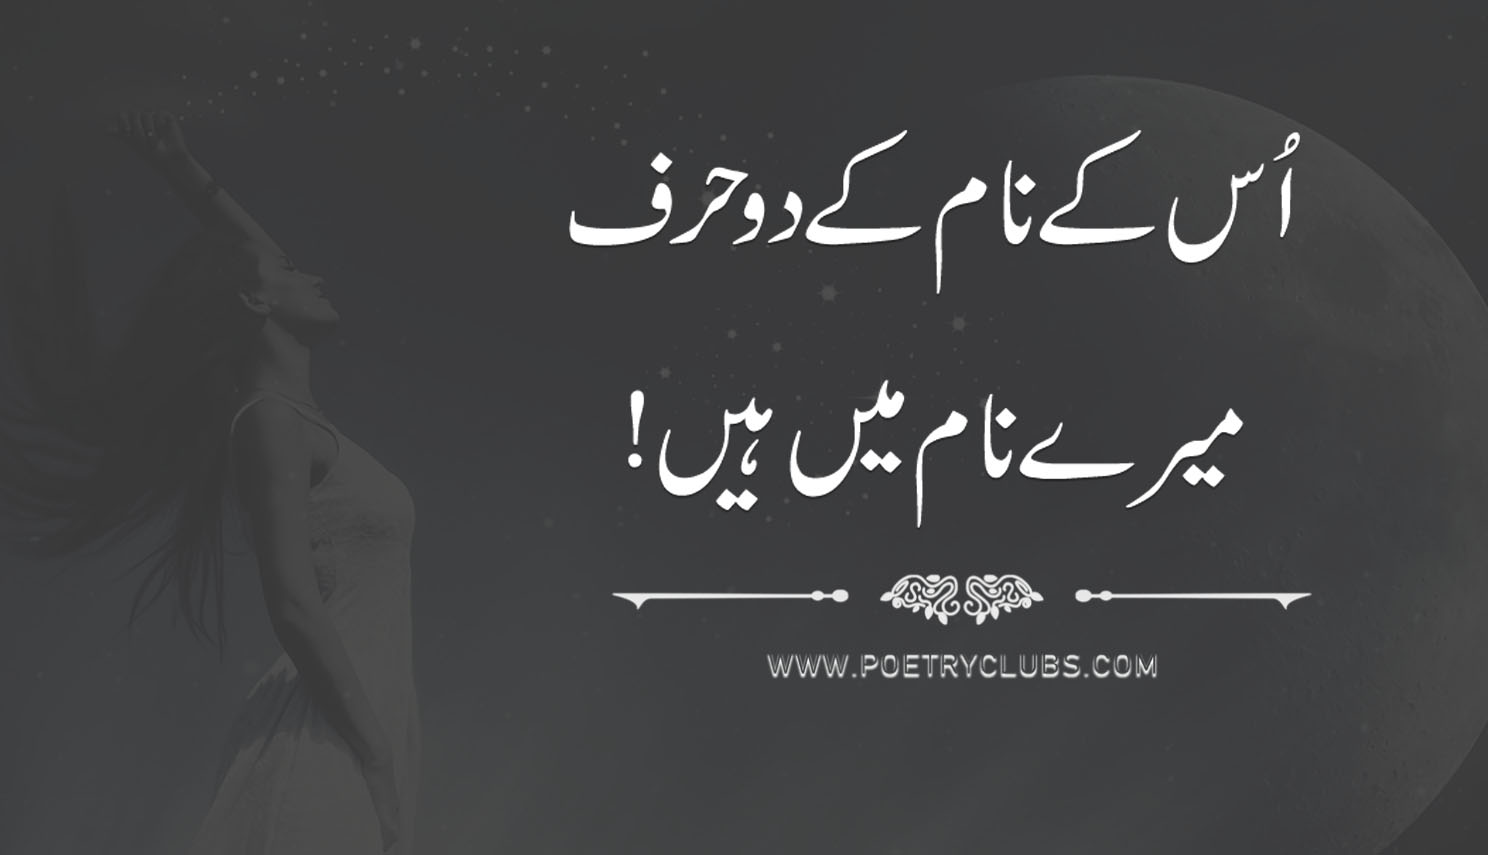 Featured image of post Urdu Poetry With Black Background The urdupoetry community on reddit